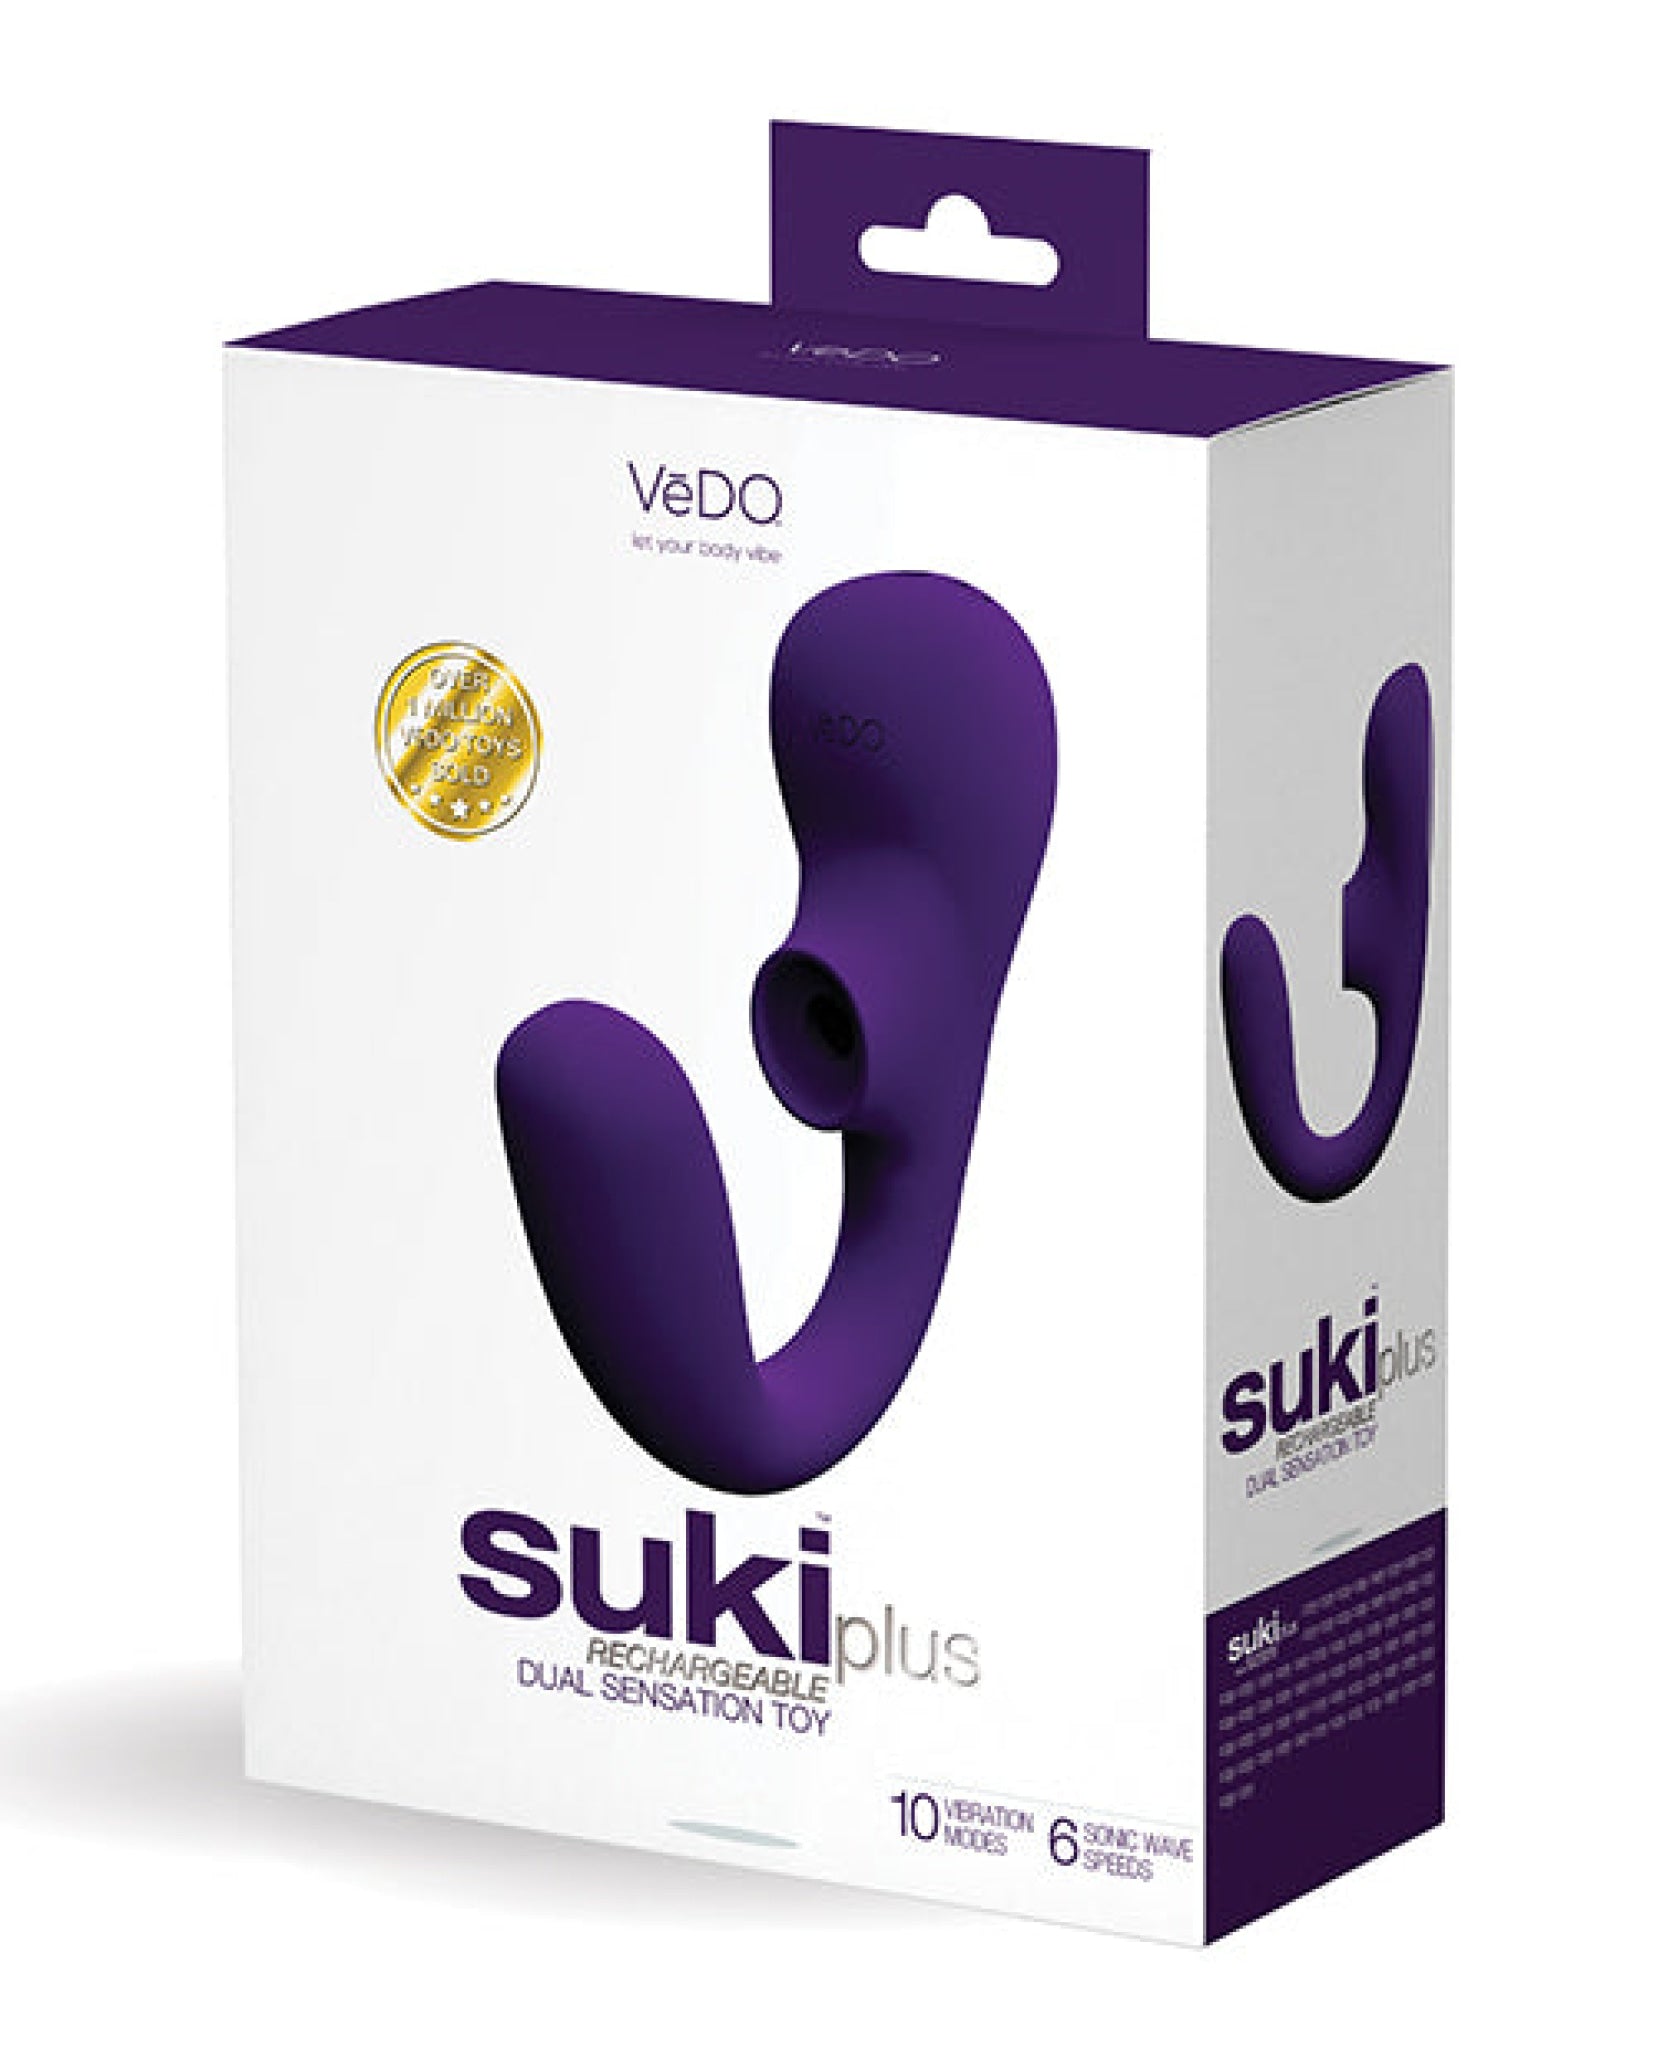 Vedo Suki Plus Rechargeable Dual Sonic Vibe VēDO